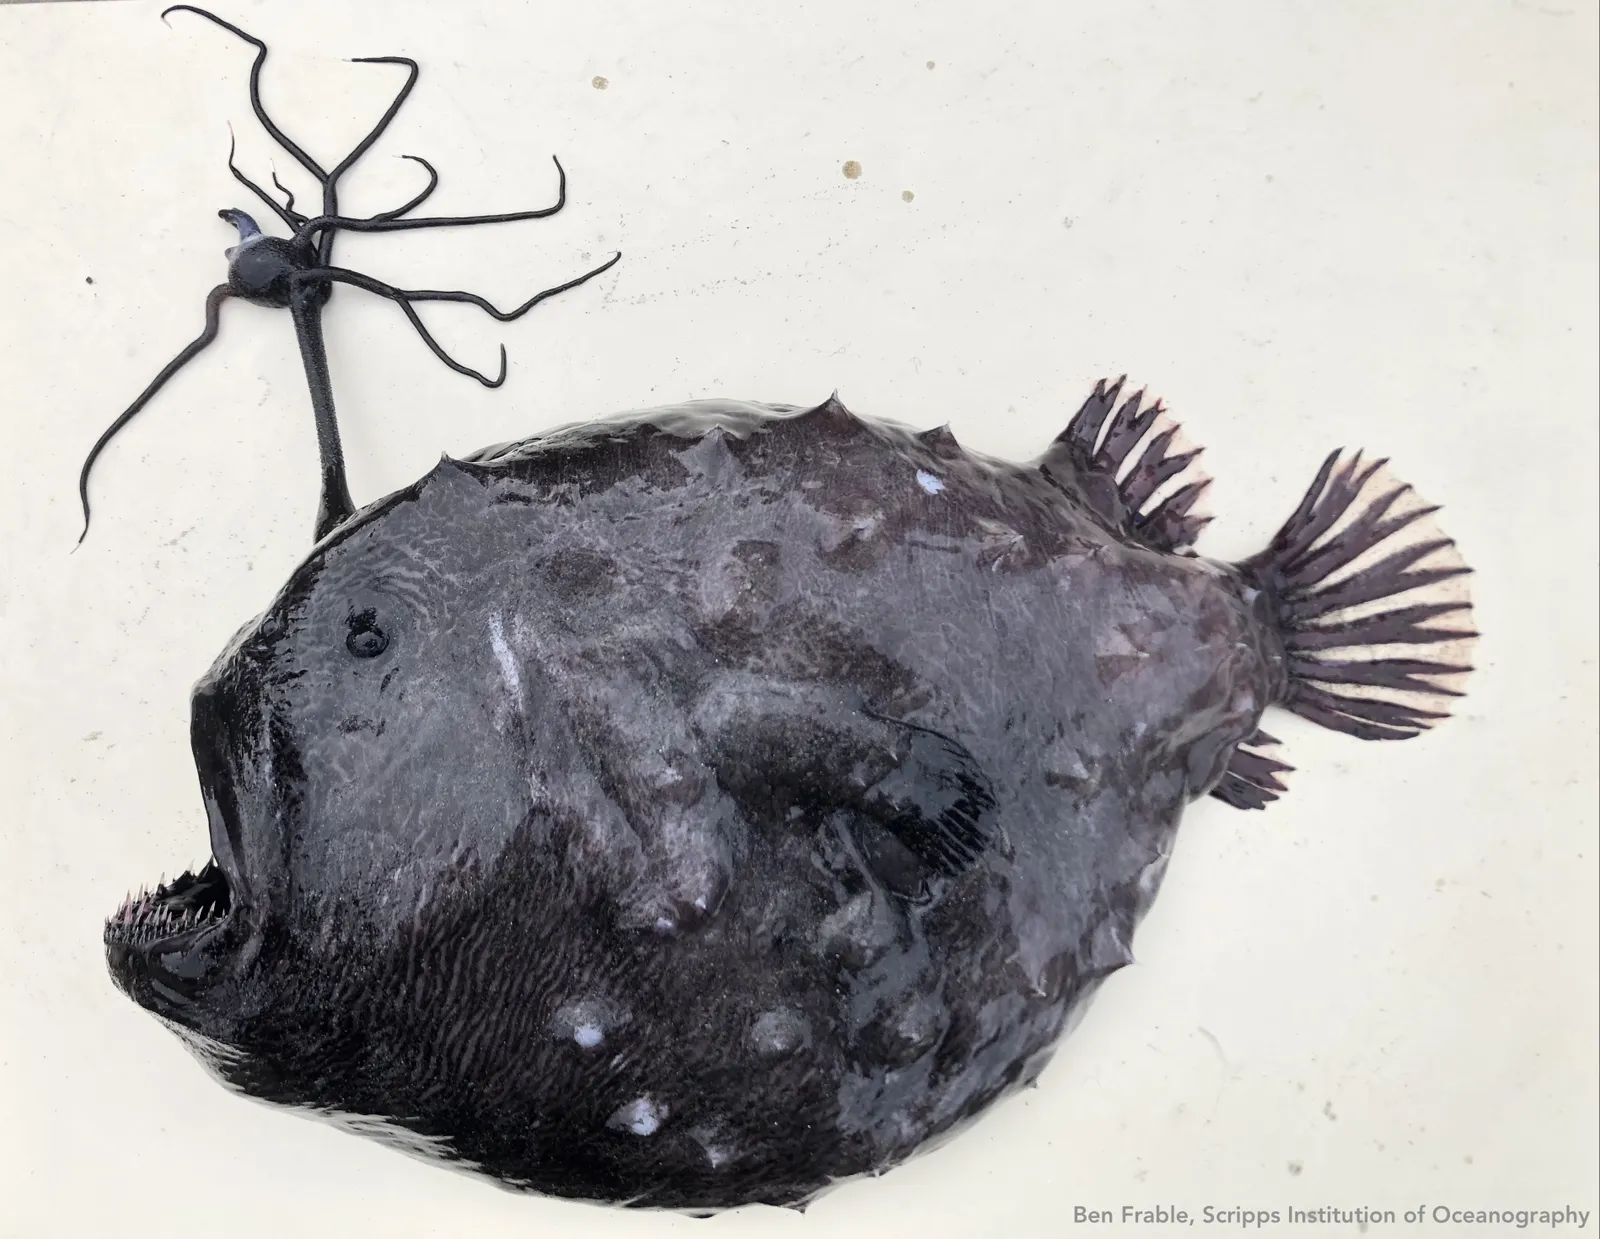 Why do deep-sea fish look like aliens?